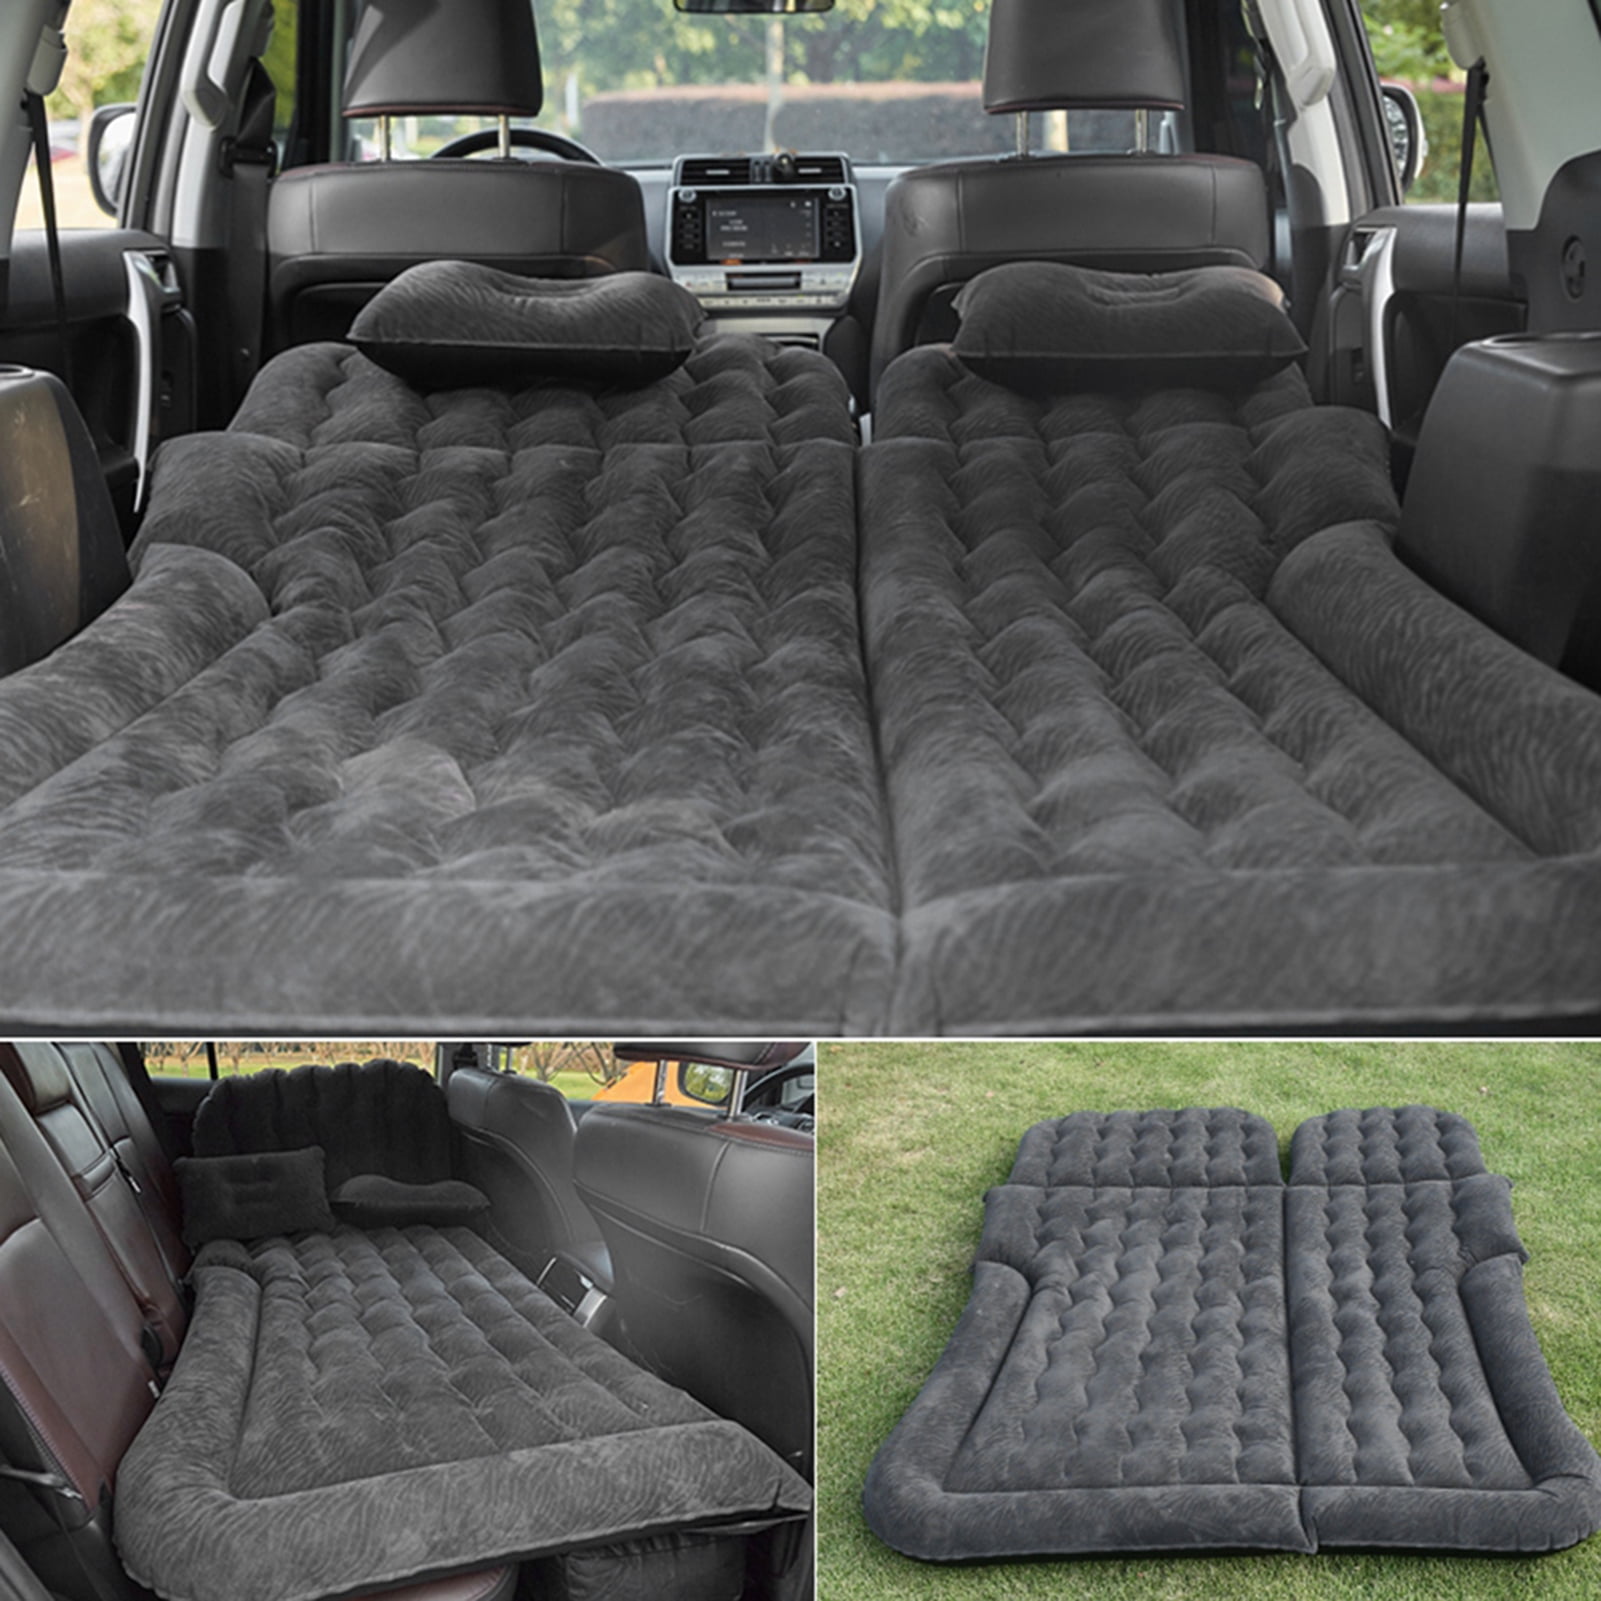 Car Air-Bed Inflatable Mattress Travel Sleeping Camping Cushion Back Seat Pads 